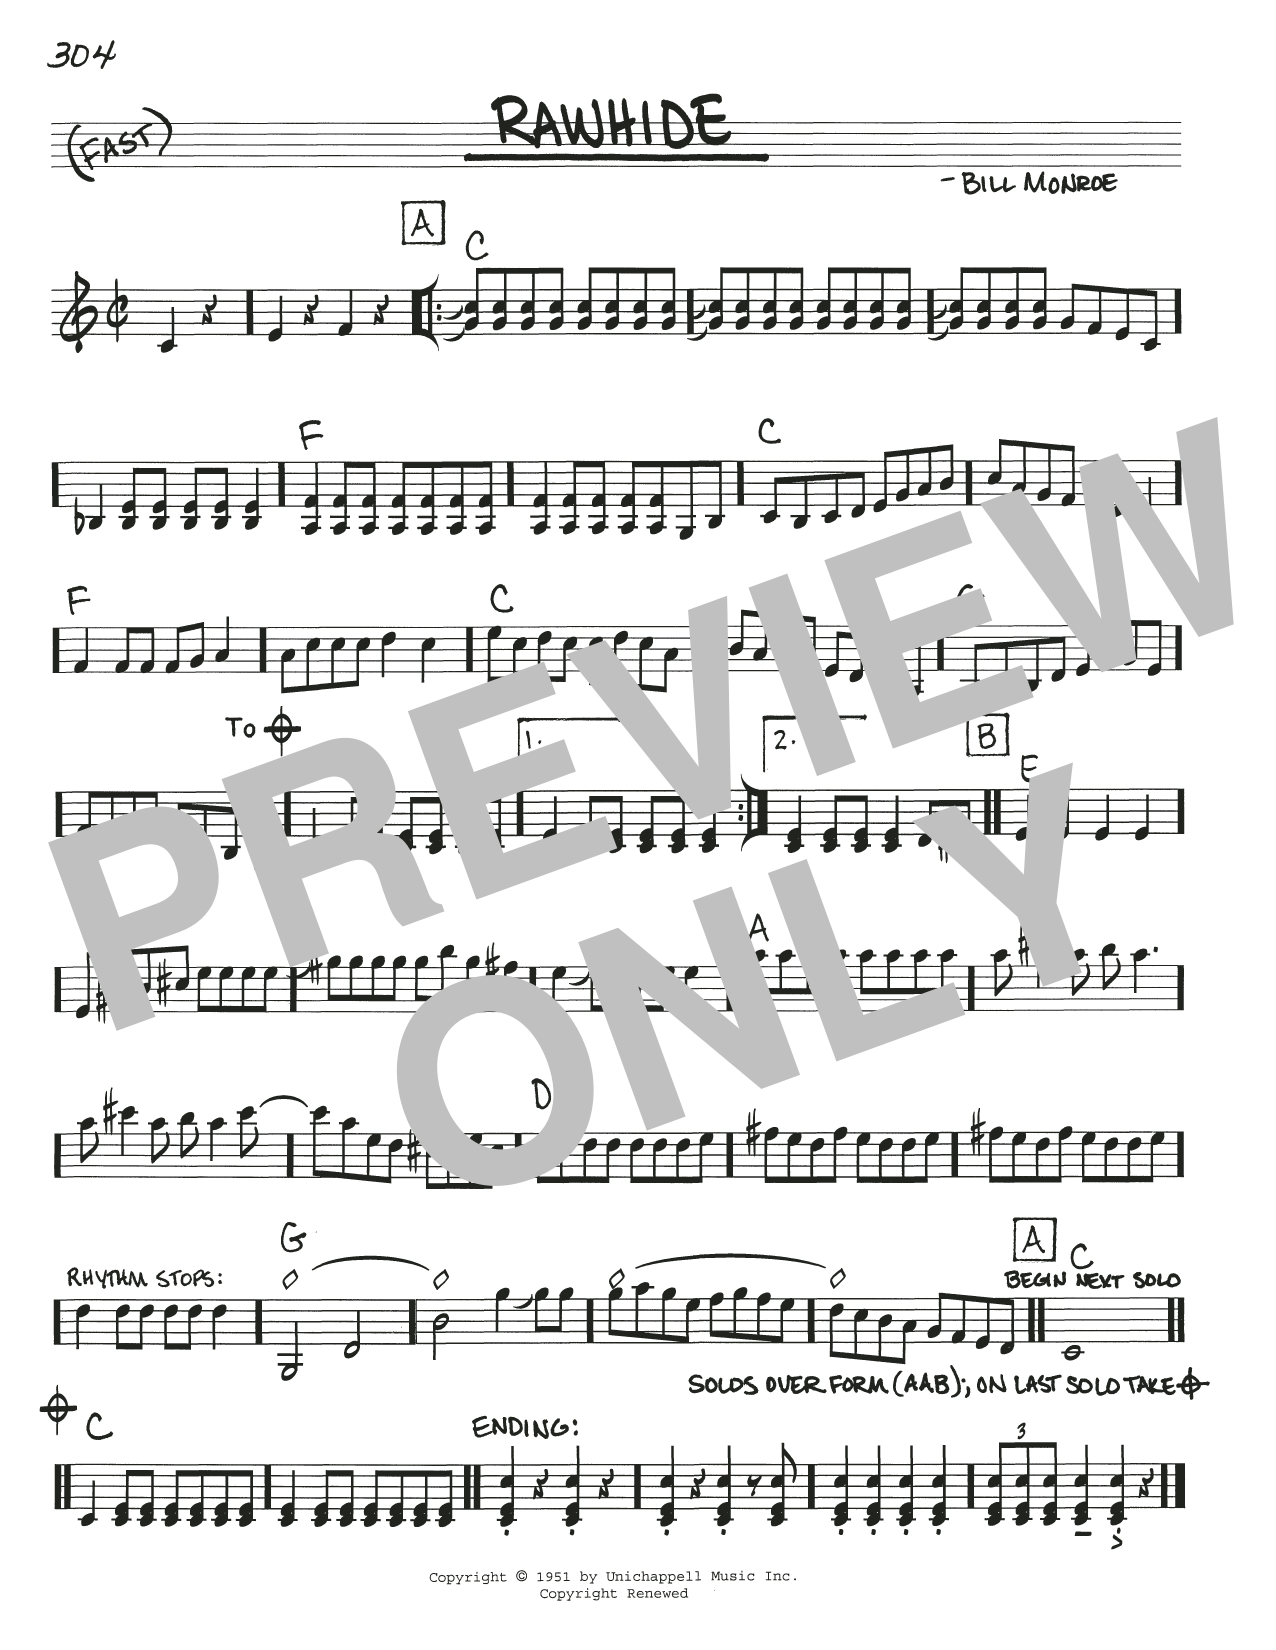 Bill Monroe Raw Hide Sheet Music Notes & Chords for Real Book – Melody, Lyrics & Chords - Download or Print PDF